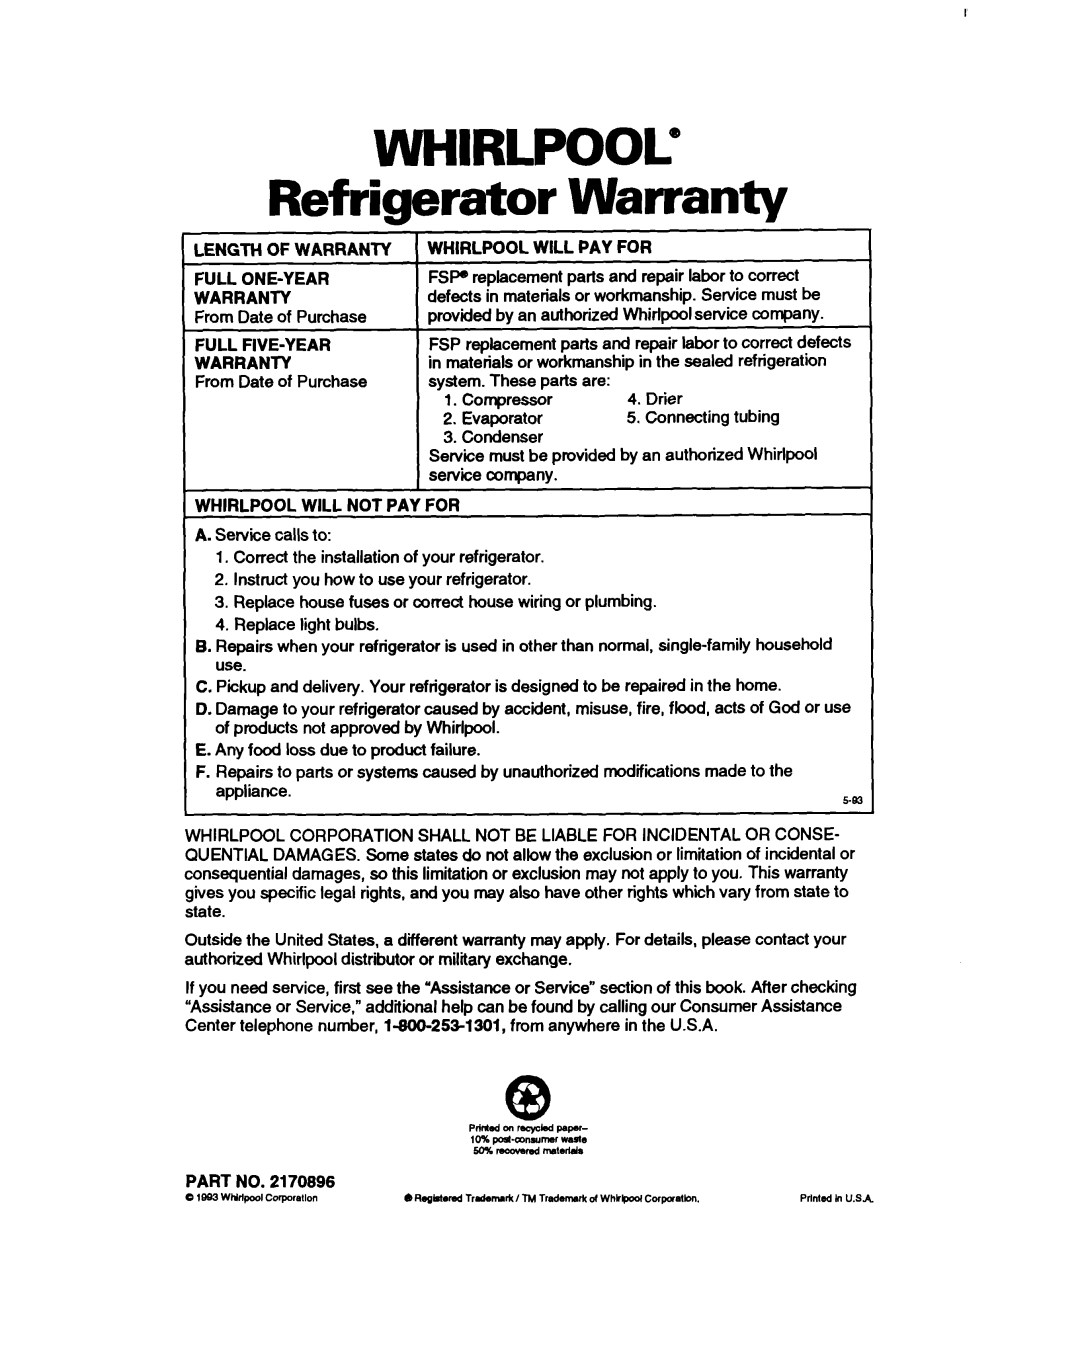 Whirlpool ED22DC WHIRLPOOL” Refrigerator Warranty, Length Of Warranty Full One-Year Warranty, Full Five-Year Warranty 